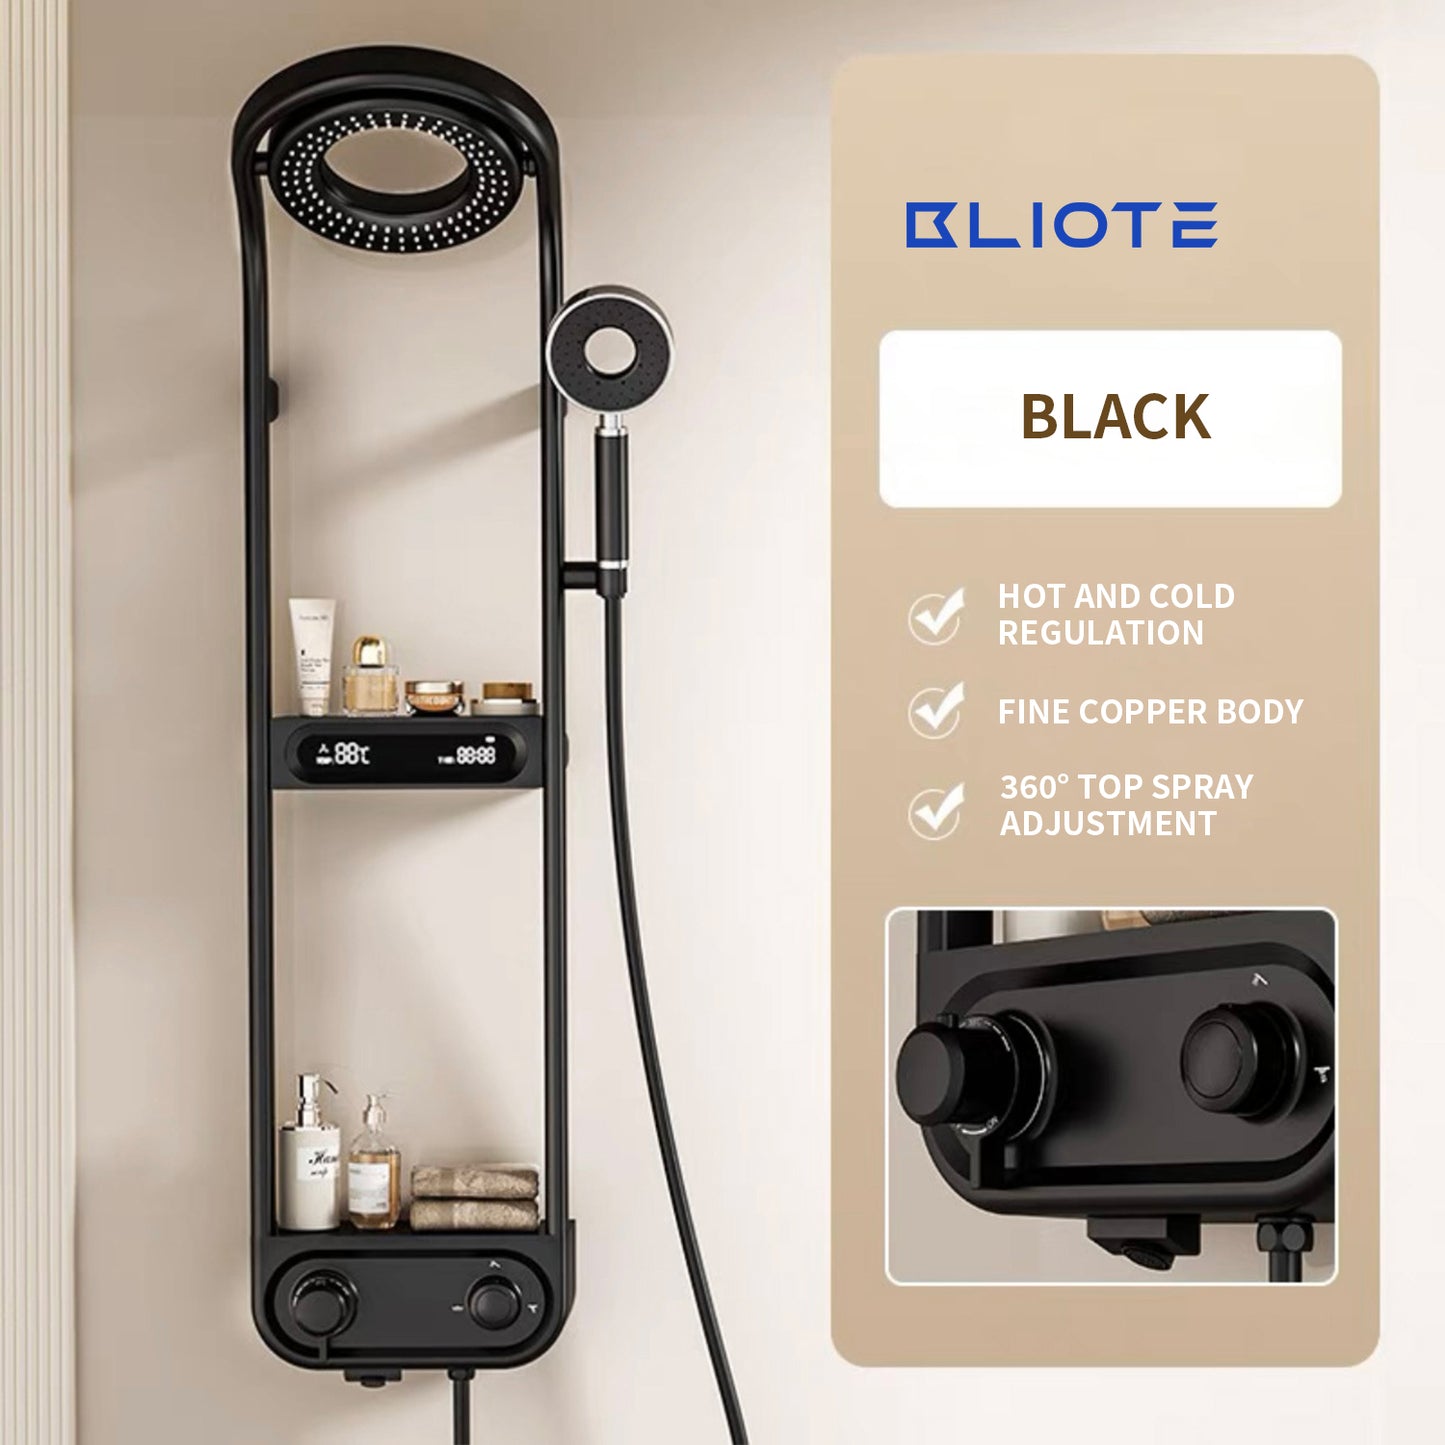 Bliote™ Three-Function Shower Set